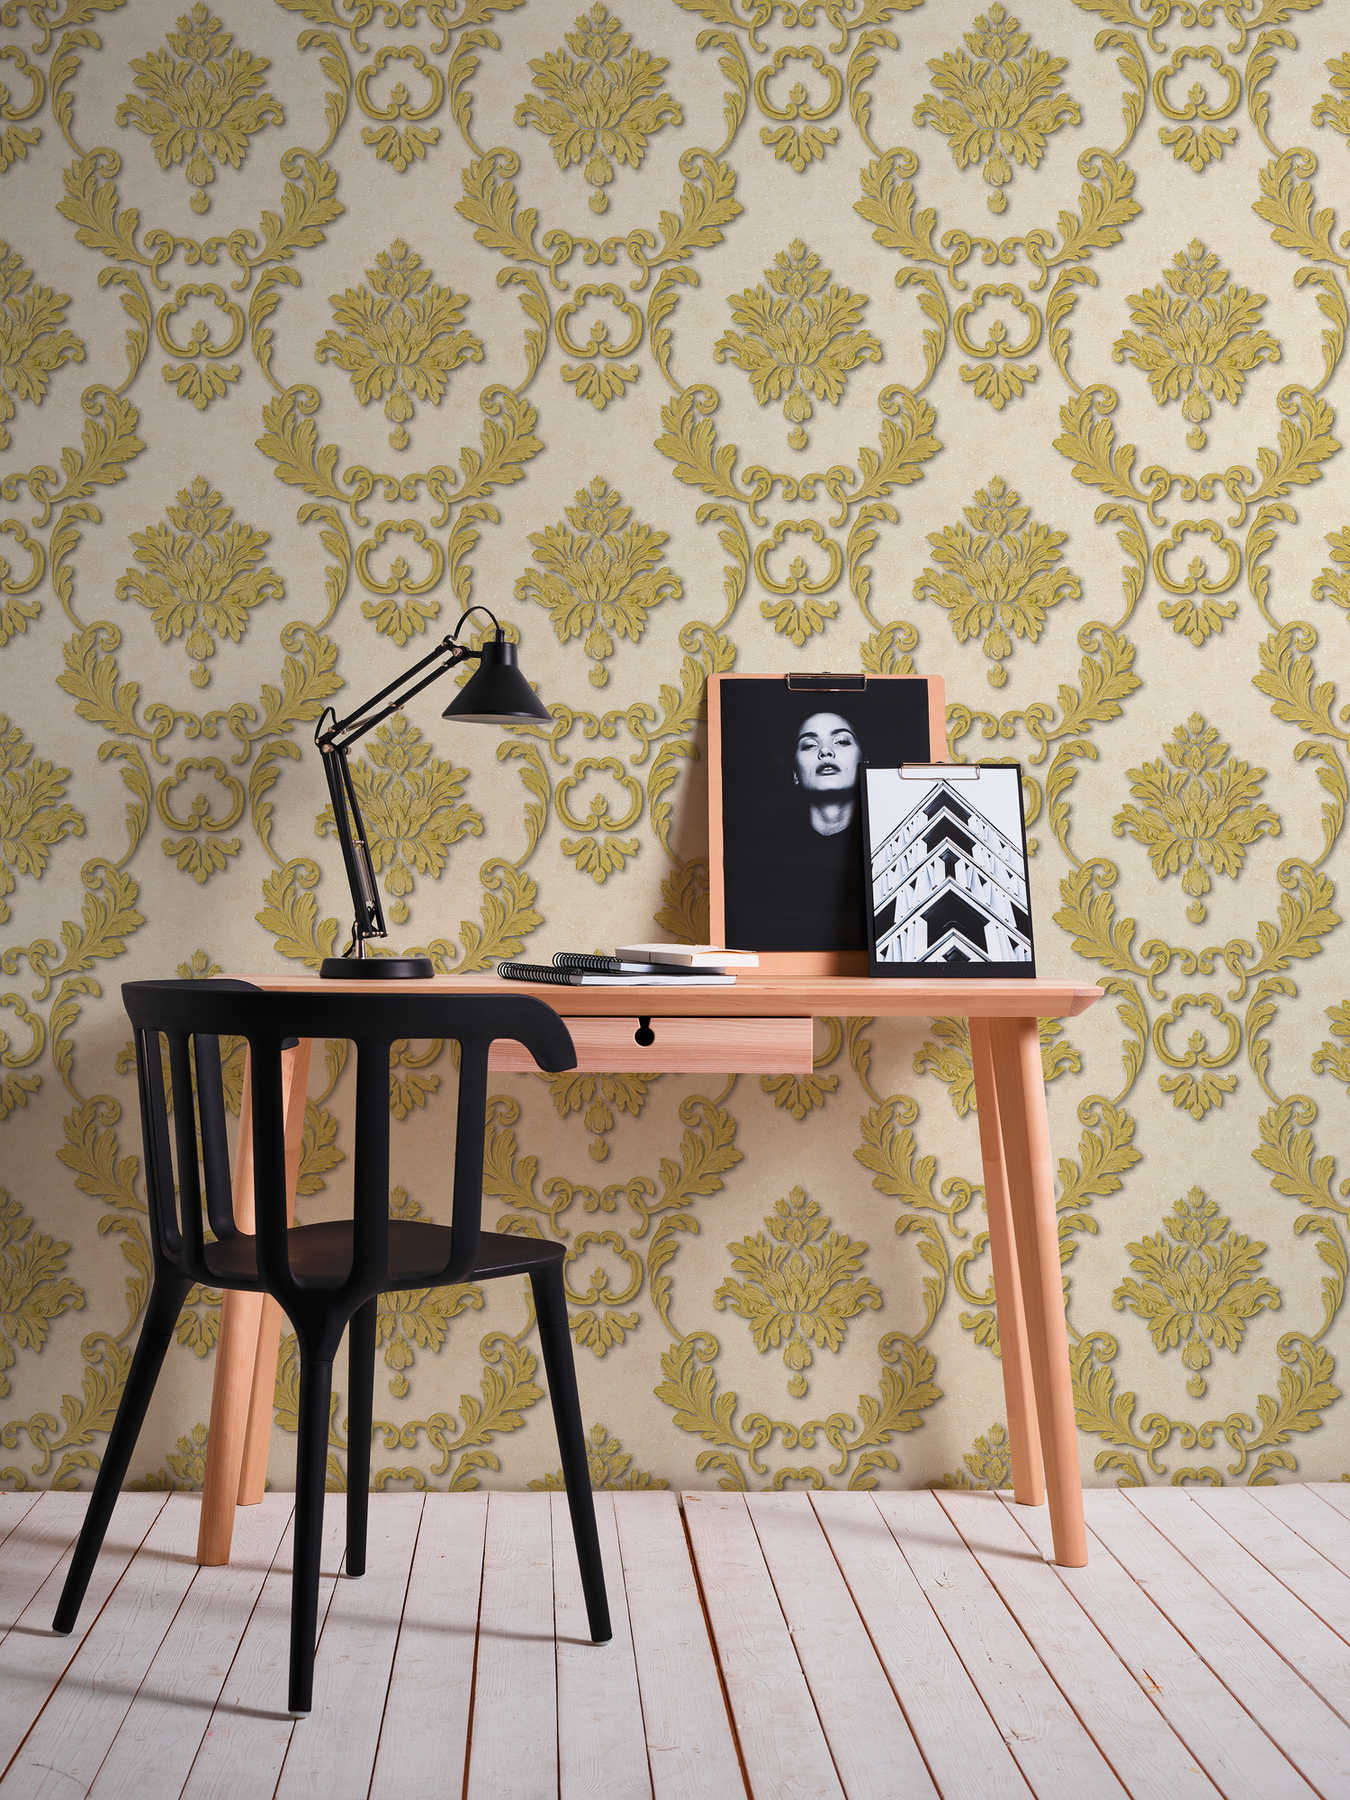             Designer wallpaper floral ornaments & metallic effect - cream, gold
        